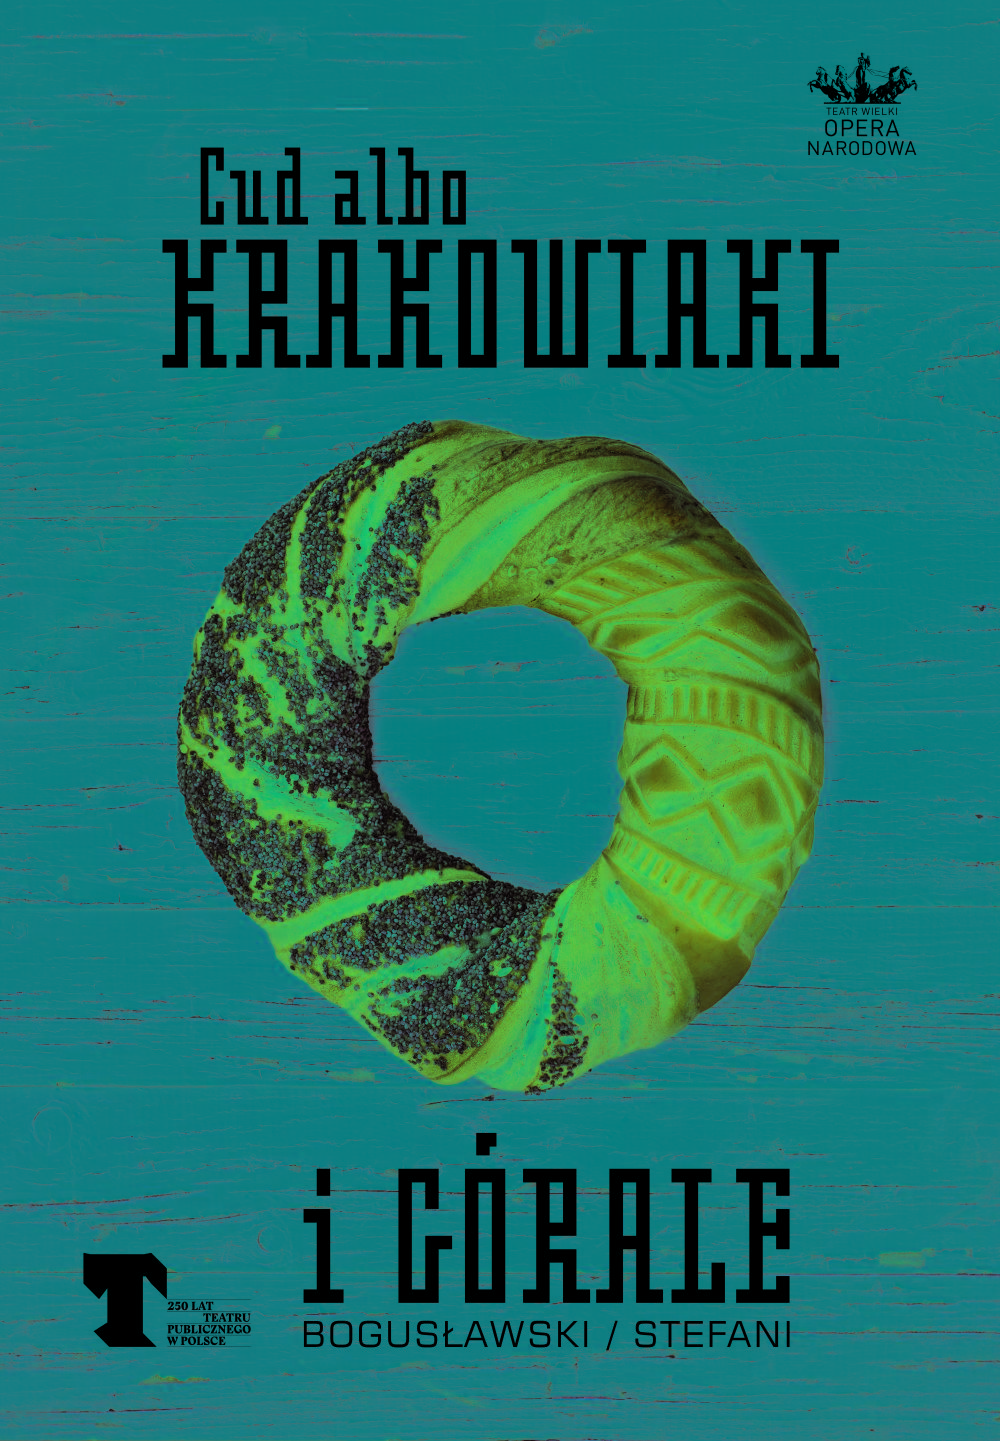 Plakat „Cud albo Krakowiaki i Górale” Wojciech Bogusławski / Jan Stefani premiera 2015-03-13